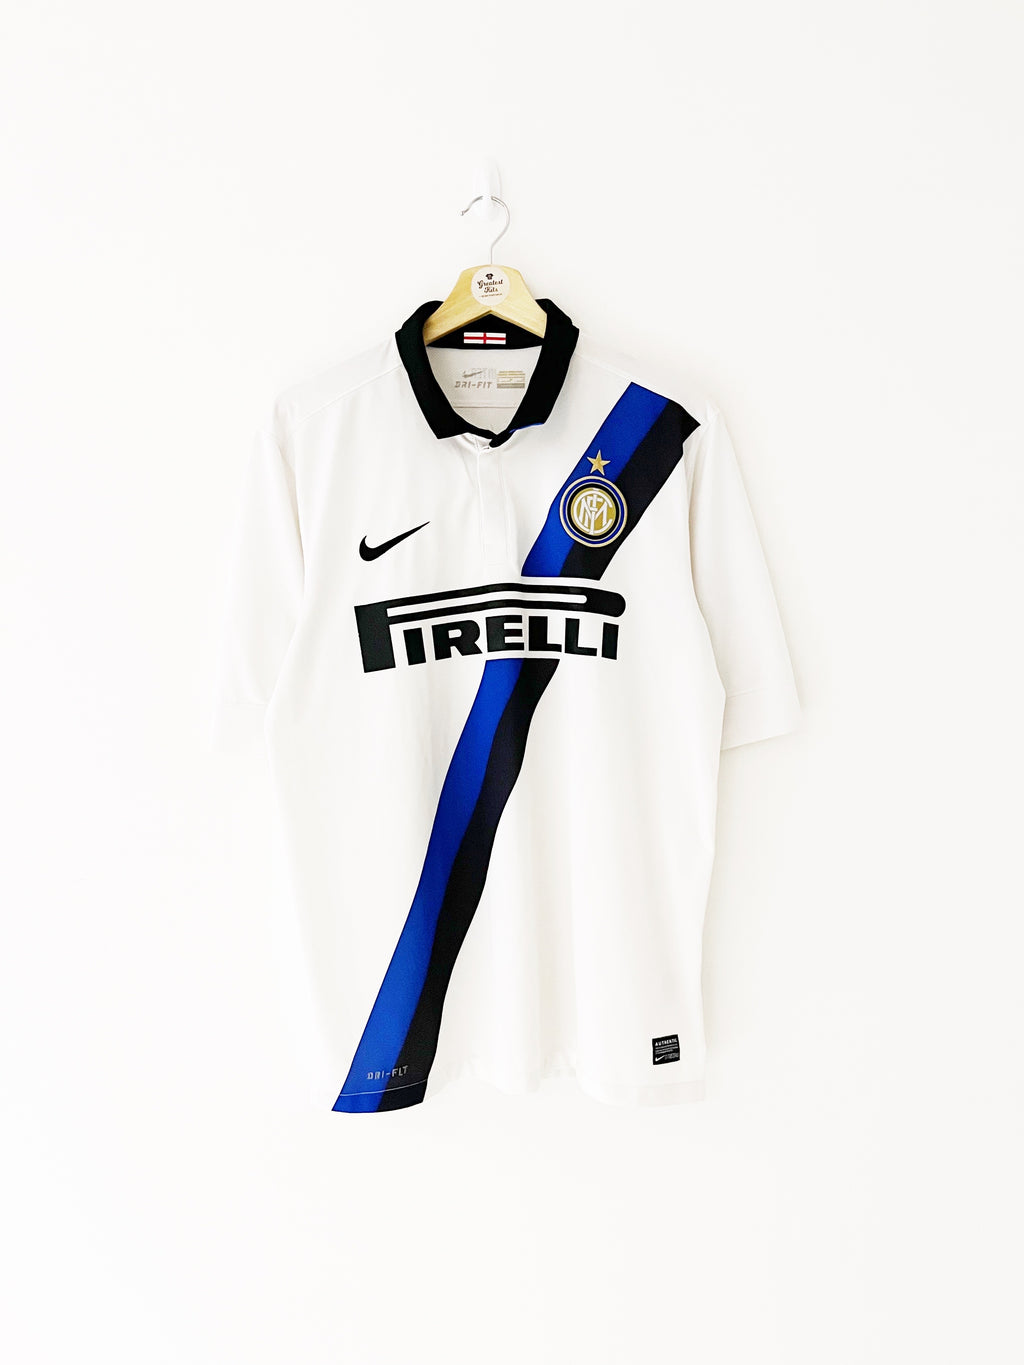 2009-10 AC Milan adidas Polo Shirt - 8/10 - (M/L)